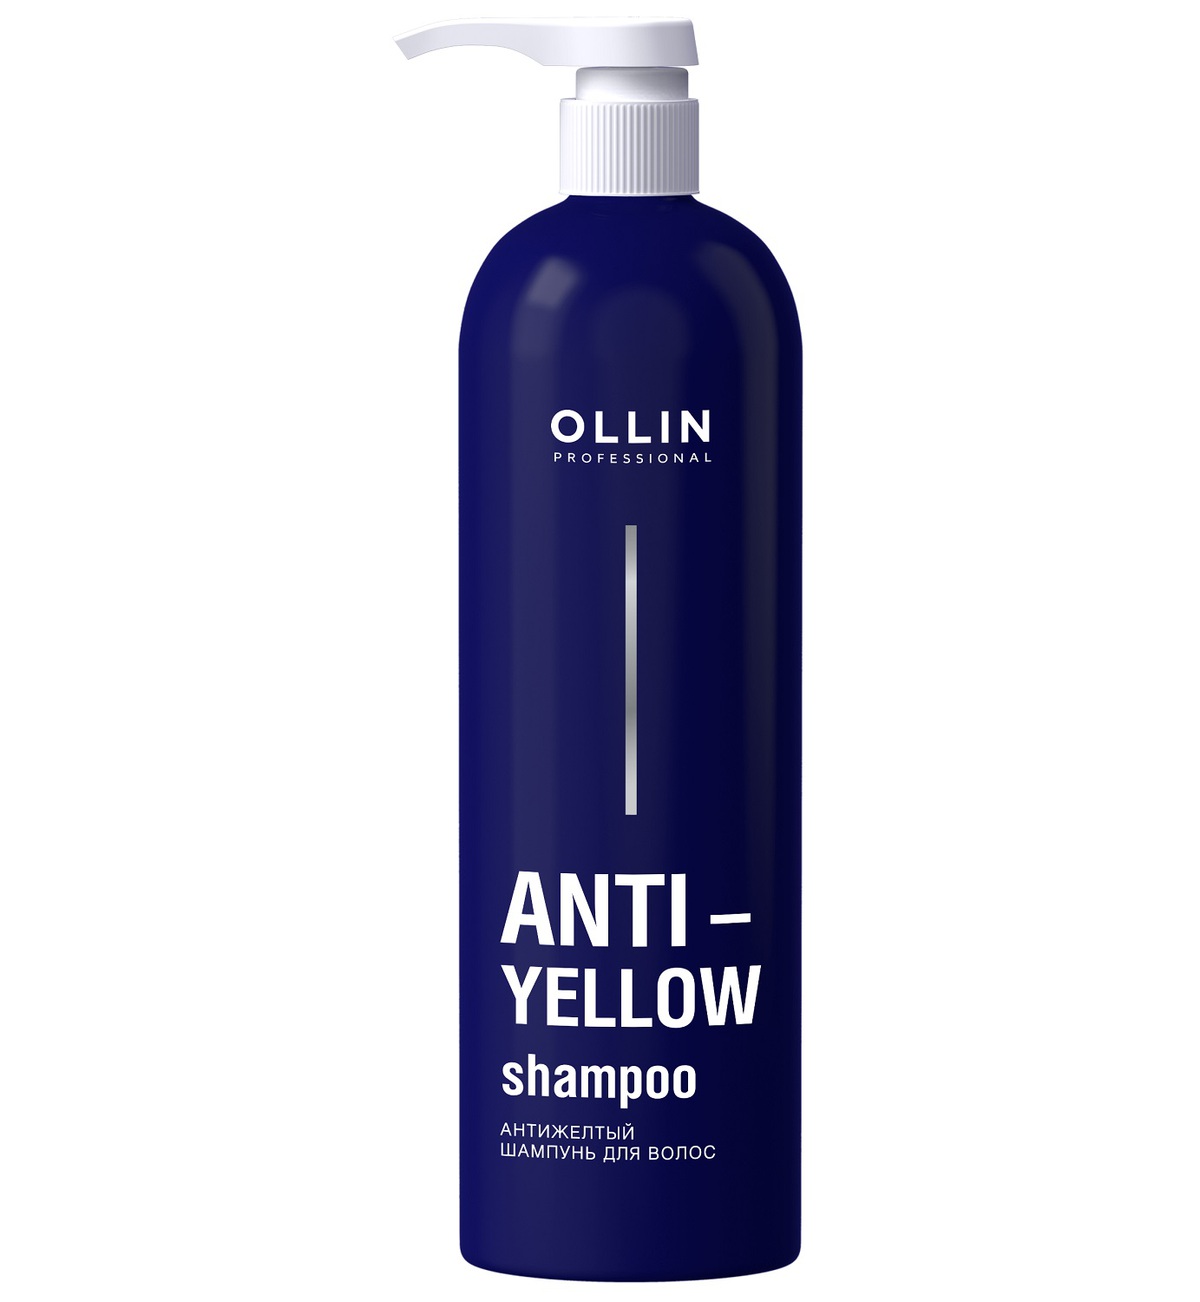 Ollin Professional Антижелтый шампунь для волос Anti-Yellow Shampoo, 500 мл (Ollin Professional, Anti-Yellow)